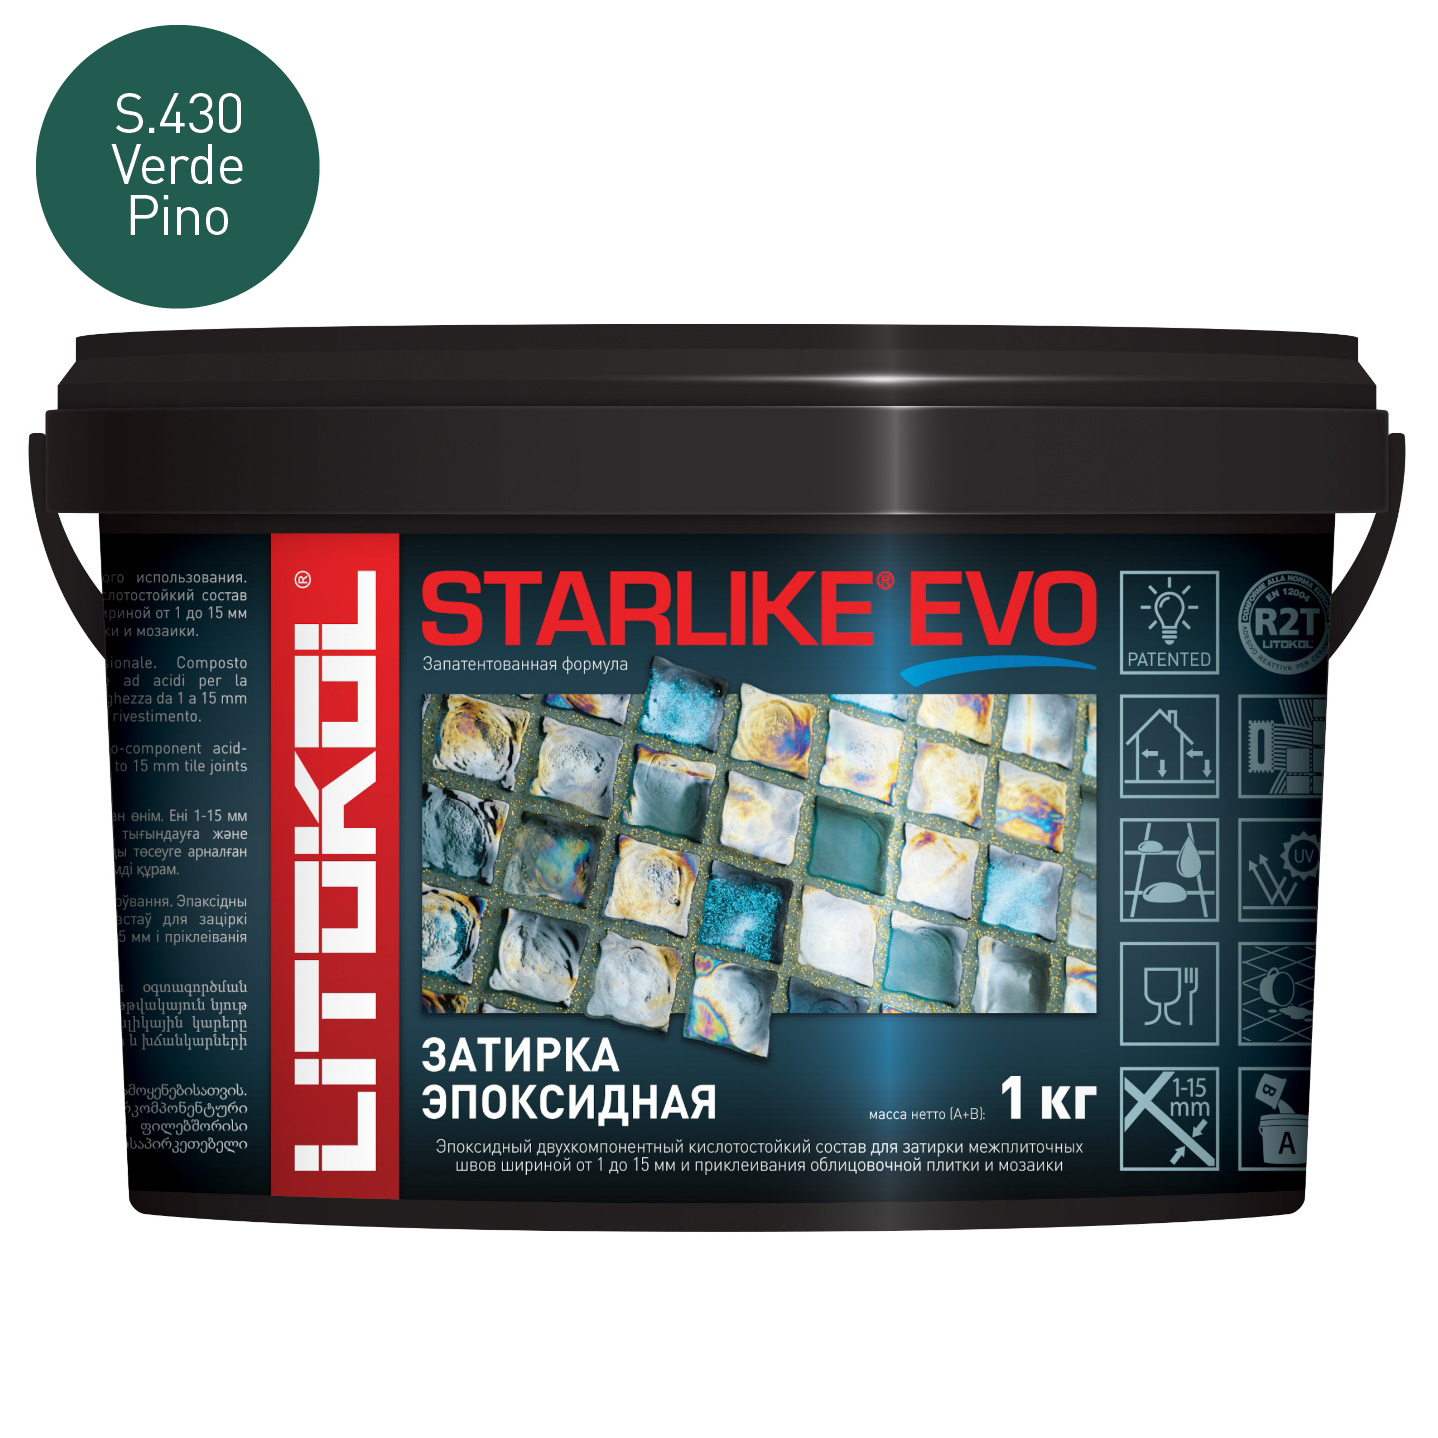 Затирка эпоксидная Litokol Starlike Evo S.430 Verde Pino (1 кг.)